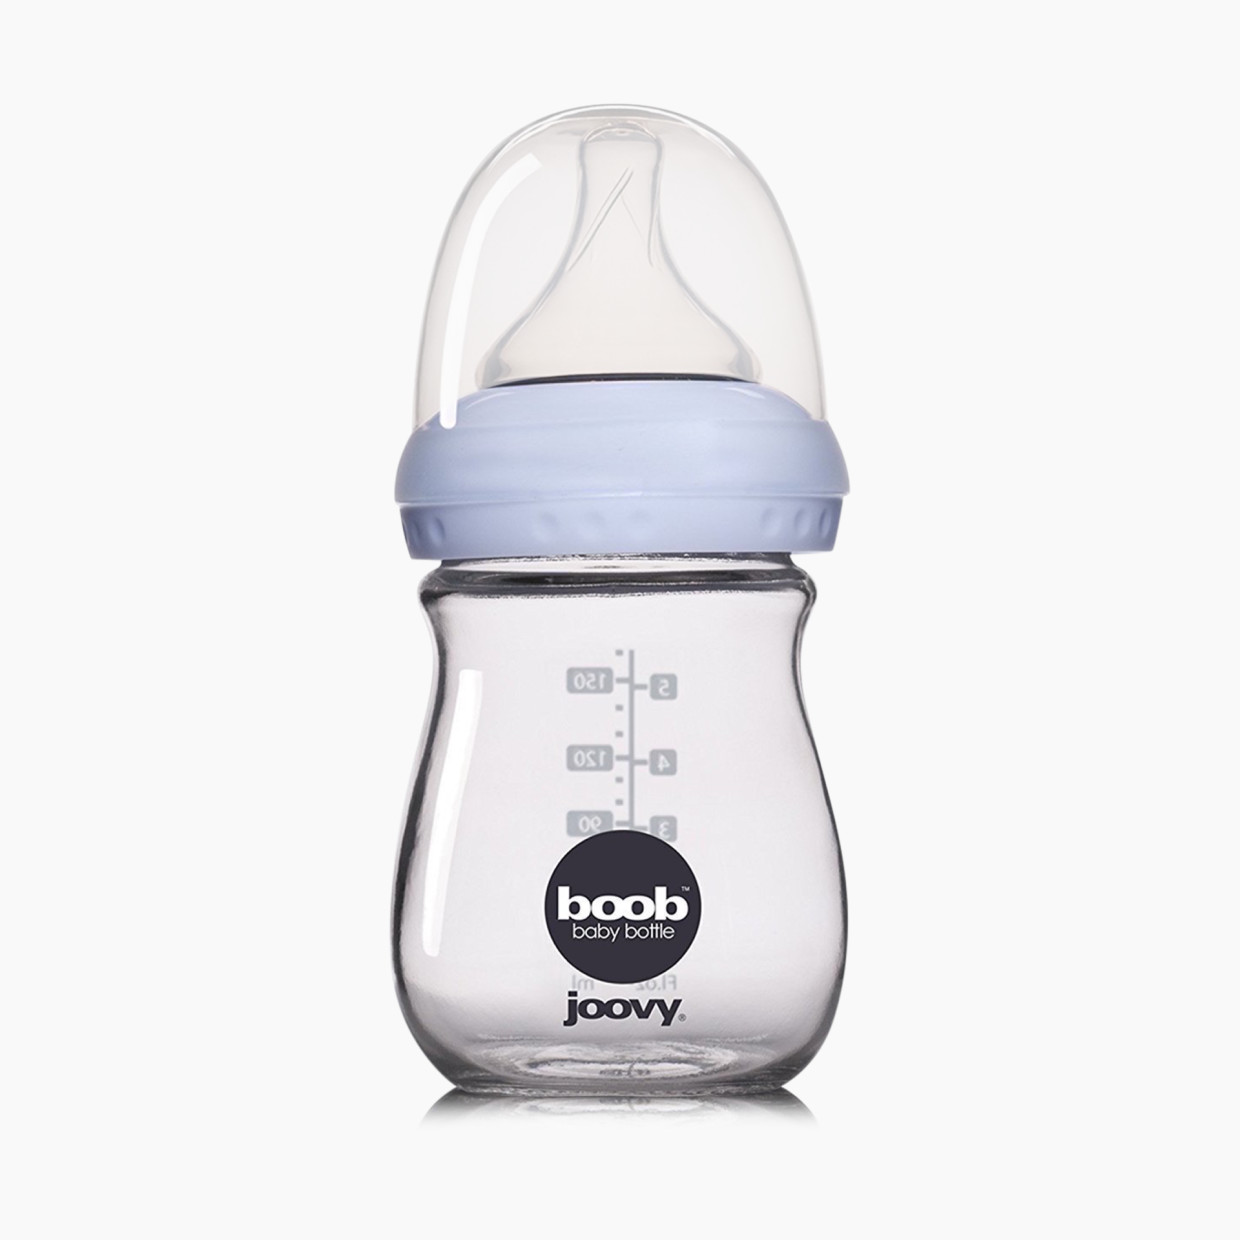 Joovy Boob Glass Baby Bottle - 5 Oz.